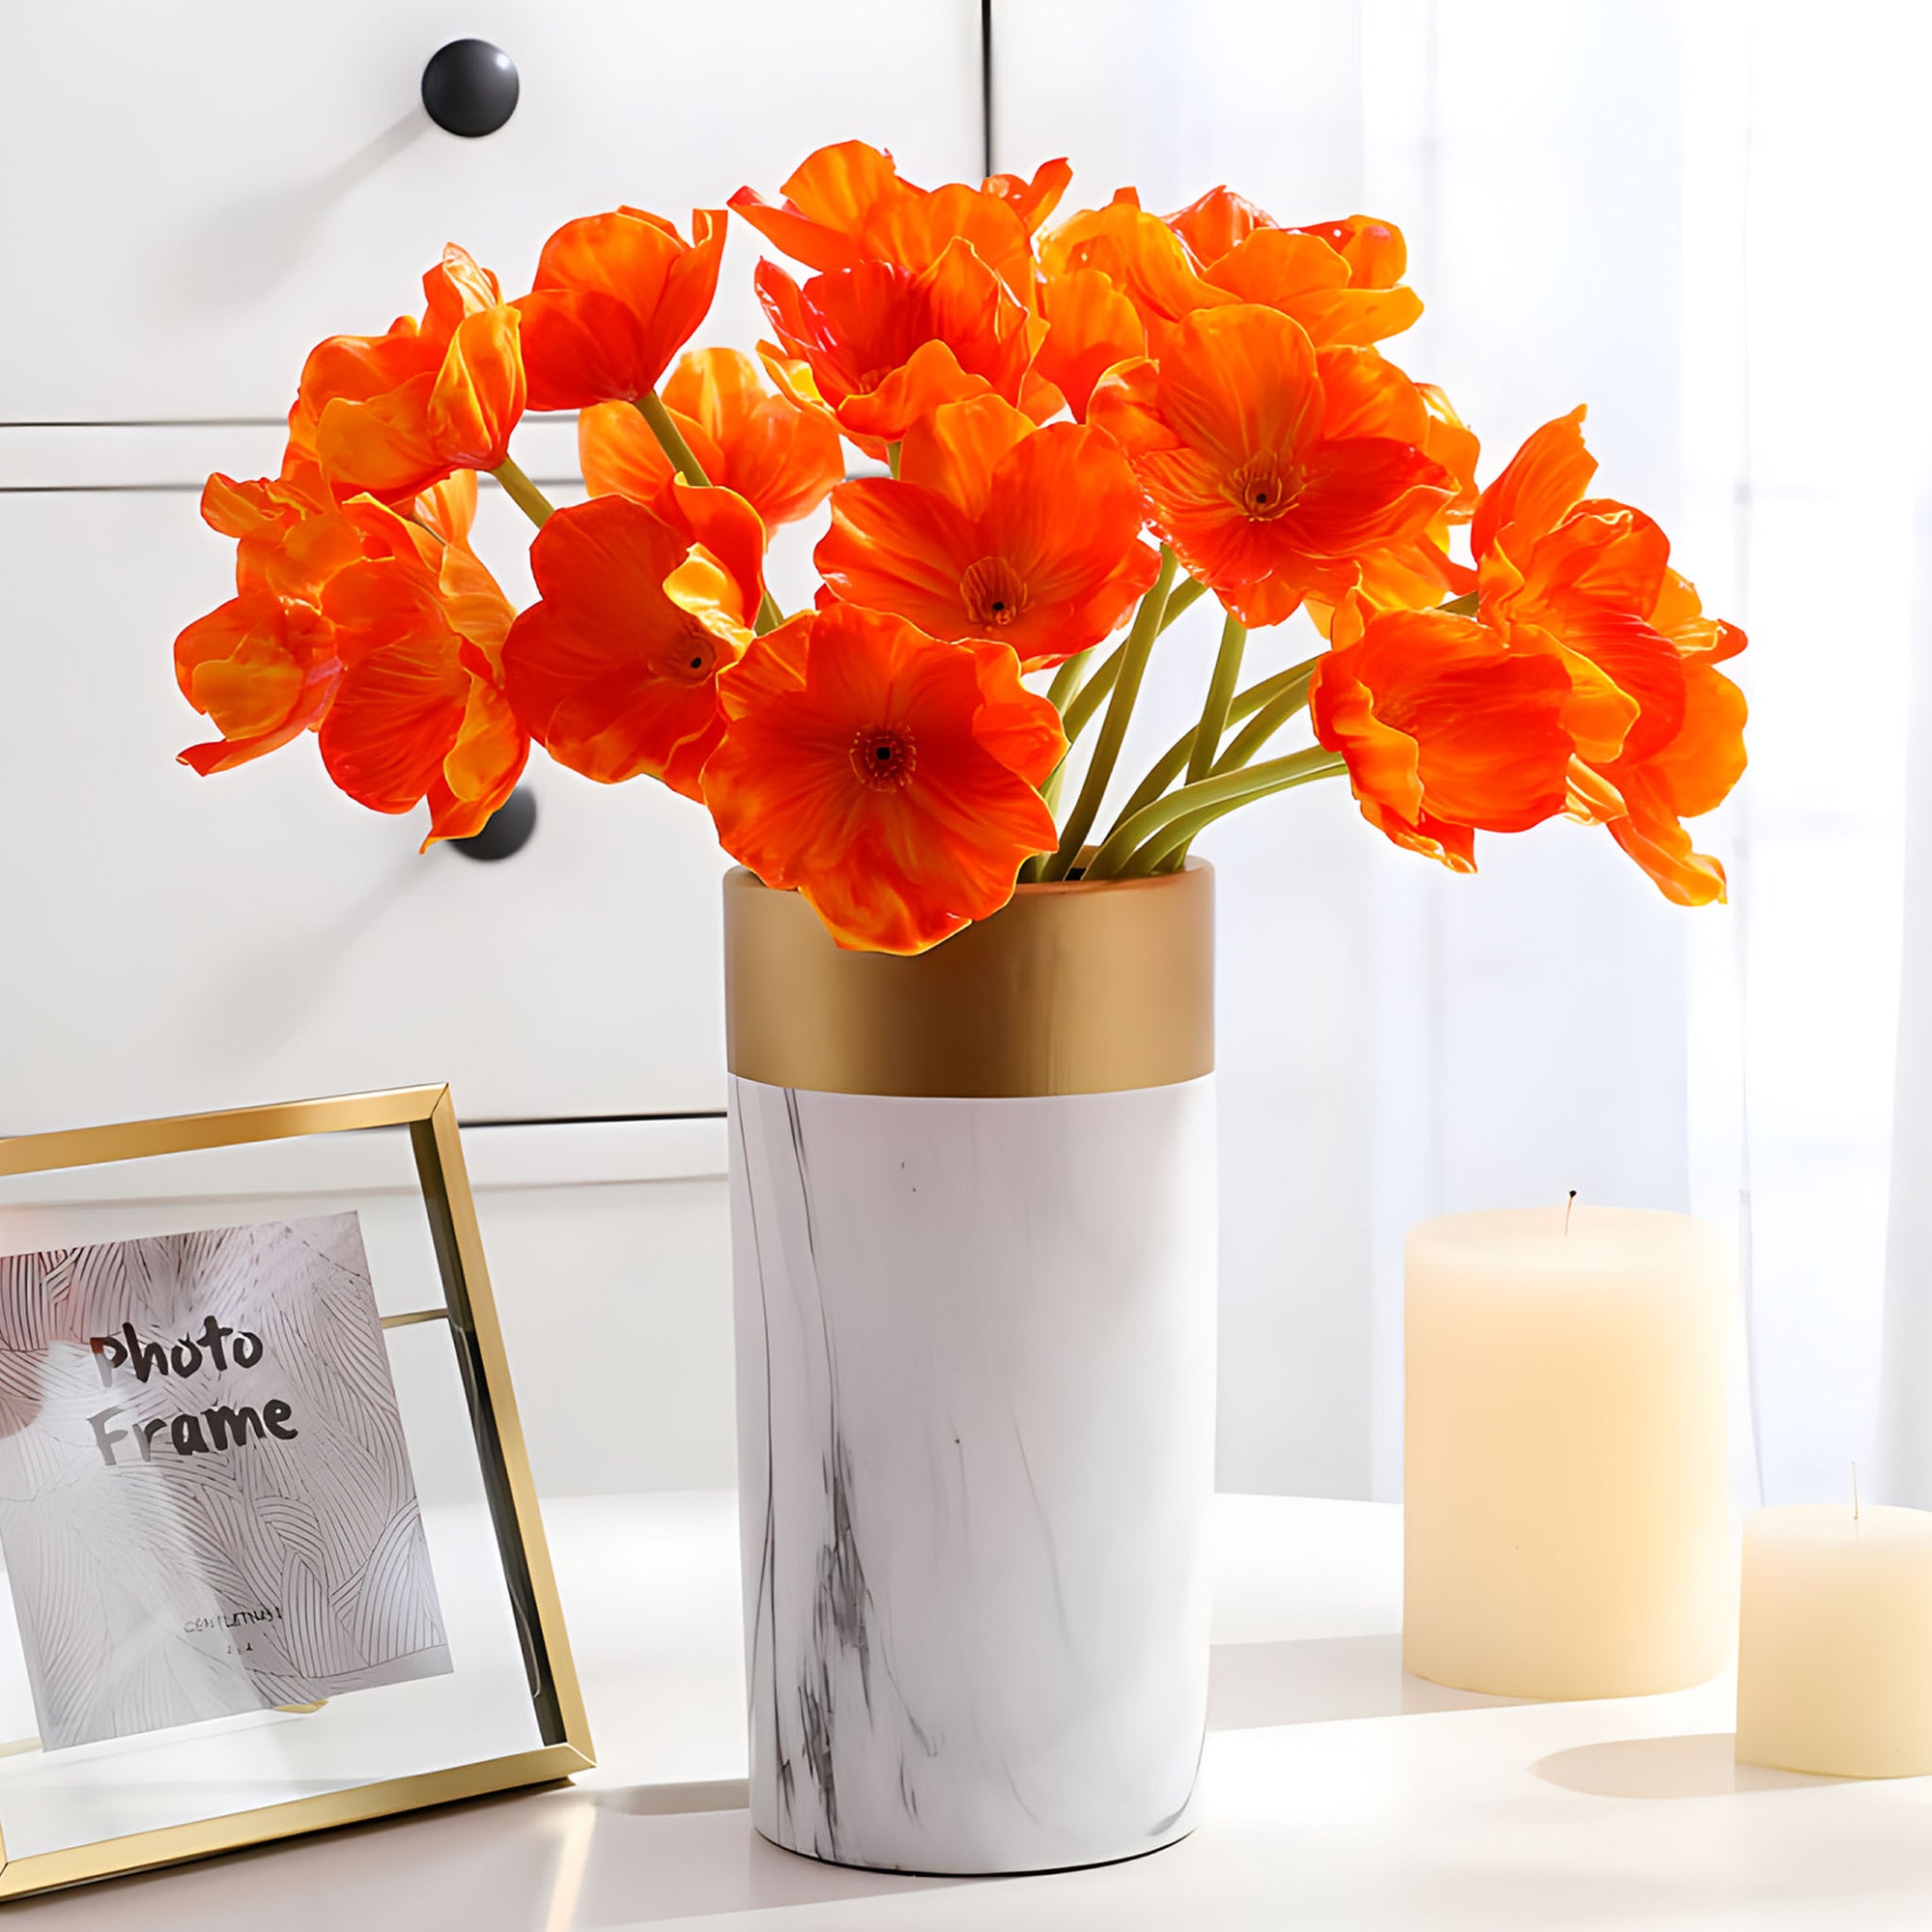 Artificial Poppy Flowers for Fall Wedding Decor Arrangement